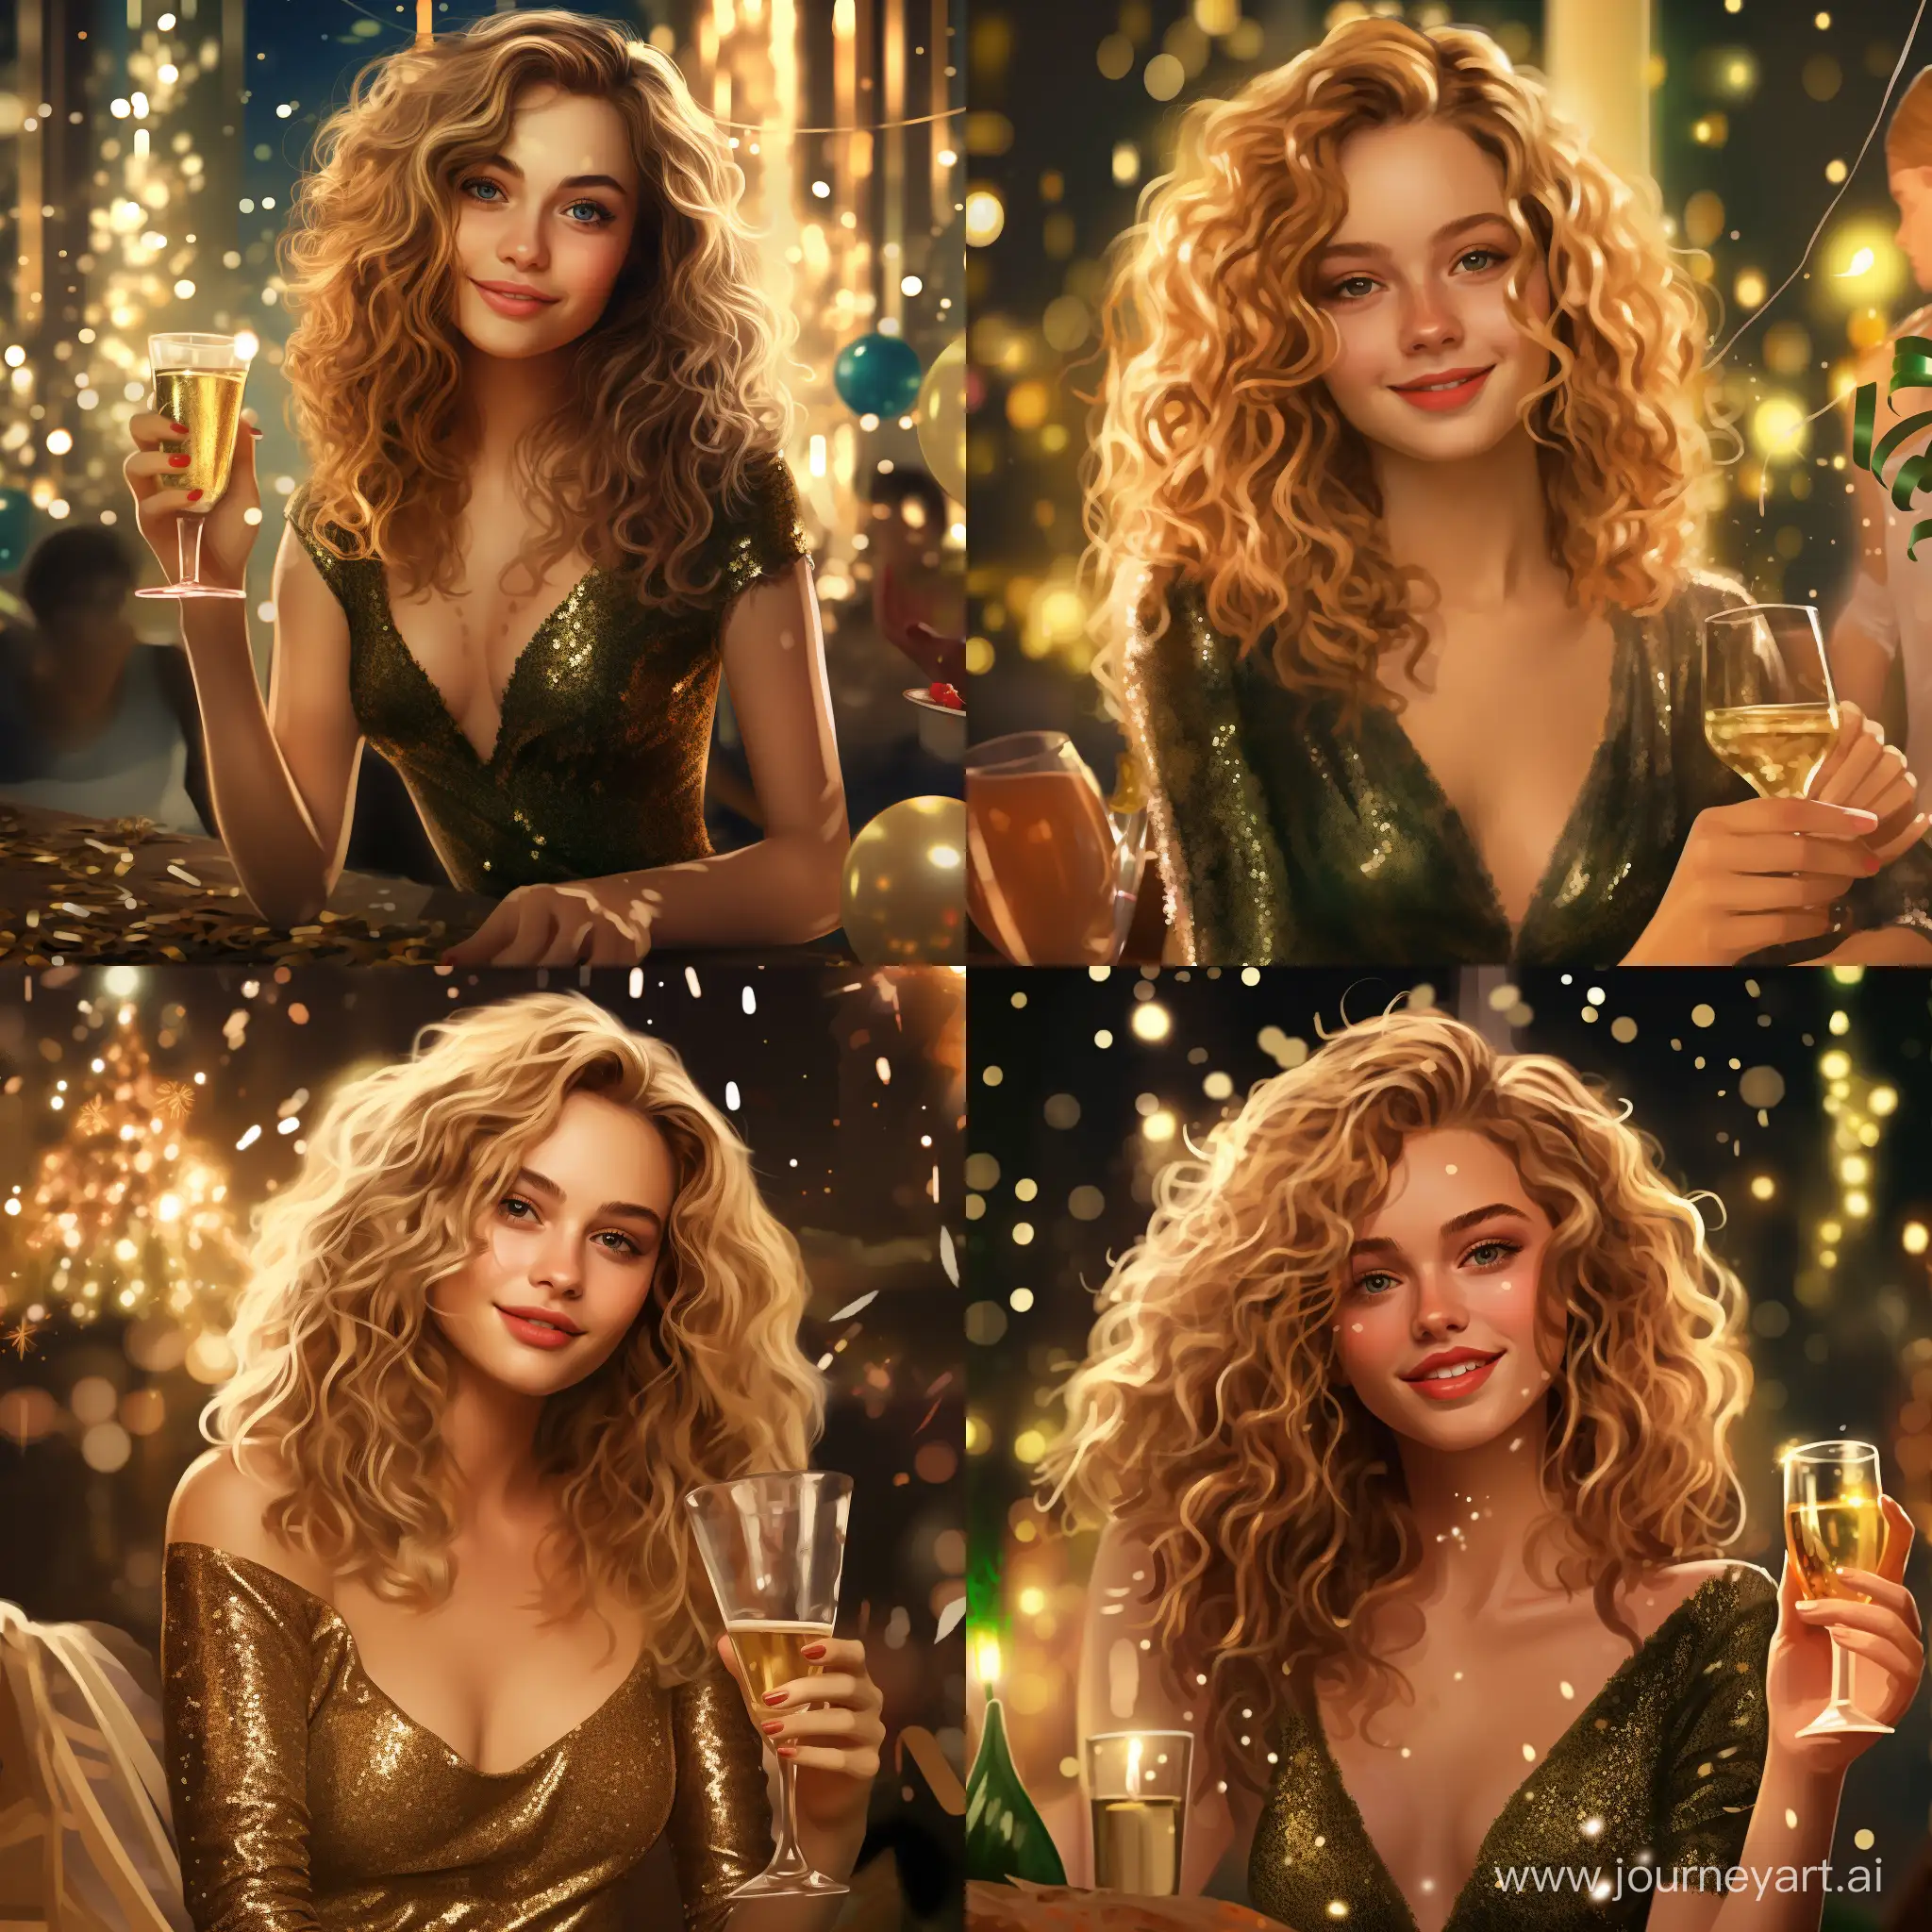 Elegant-New-Year-Celebration-Captivating-Woman-Toasting-with-Champagne